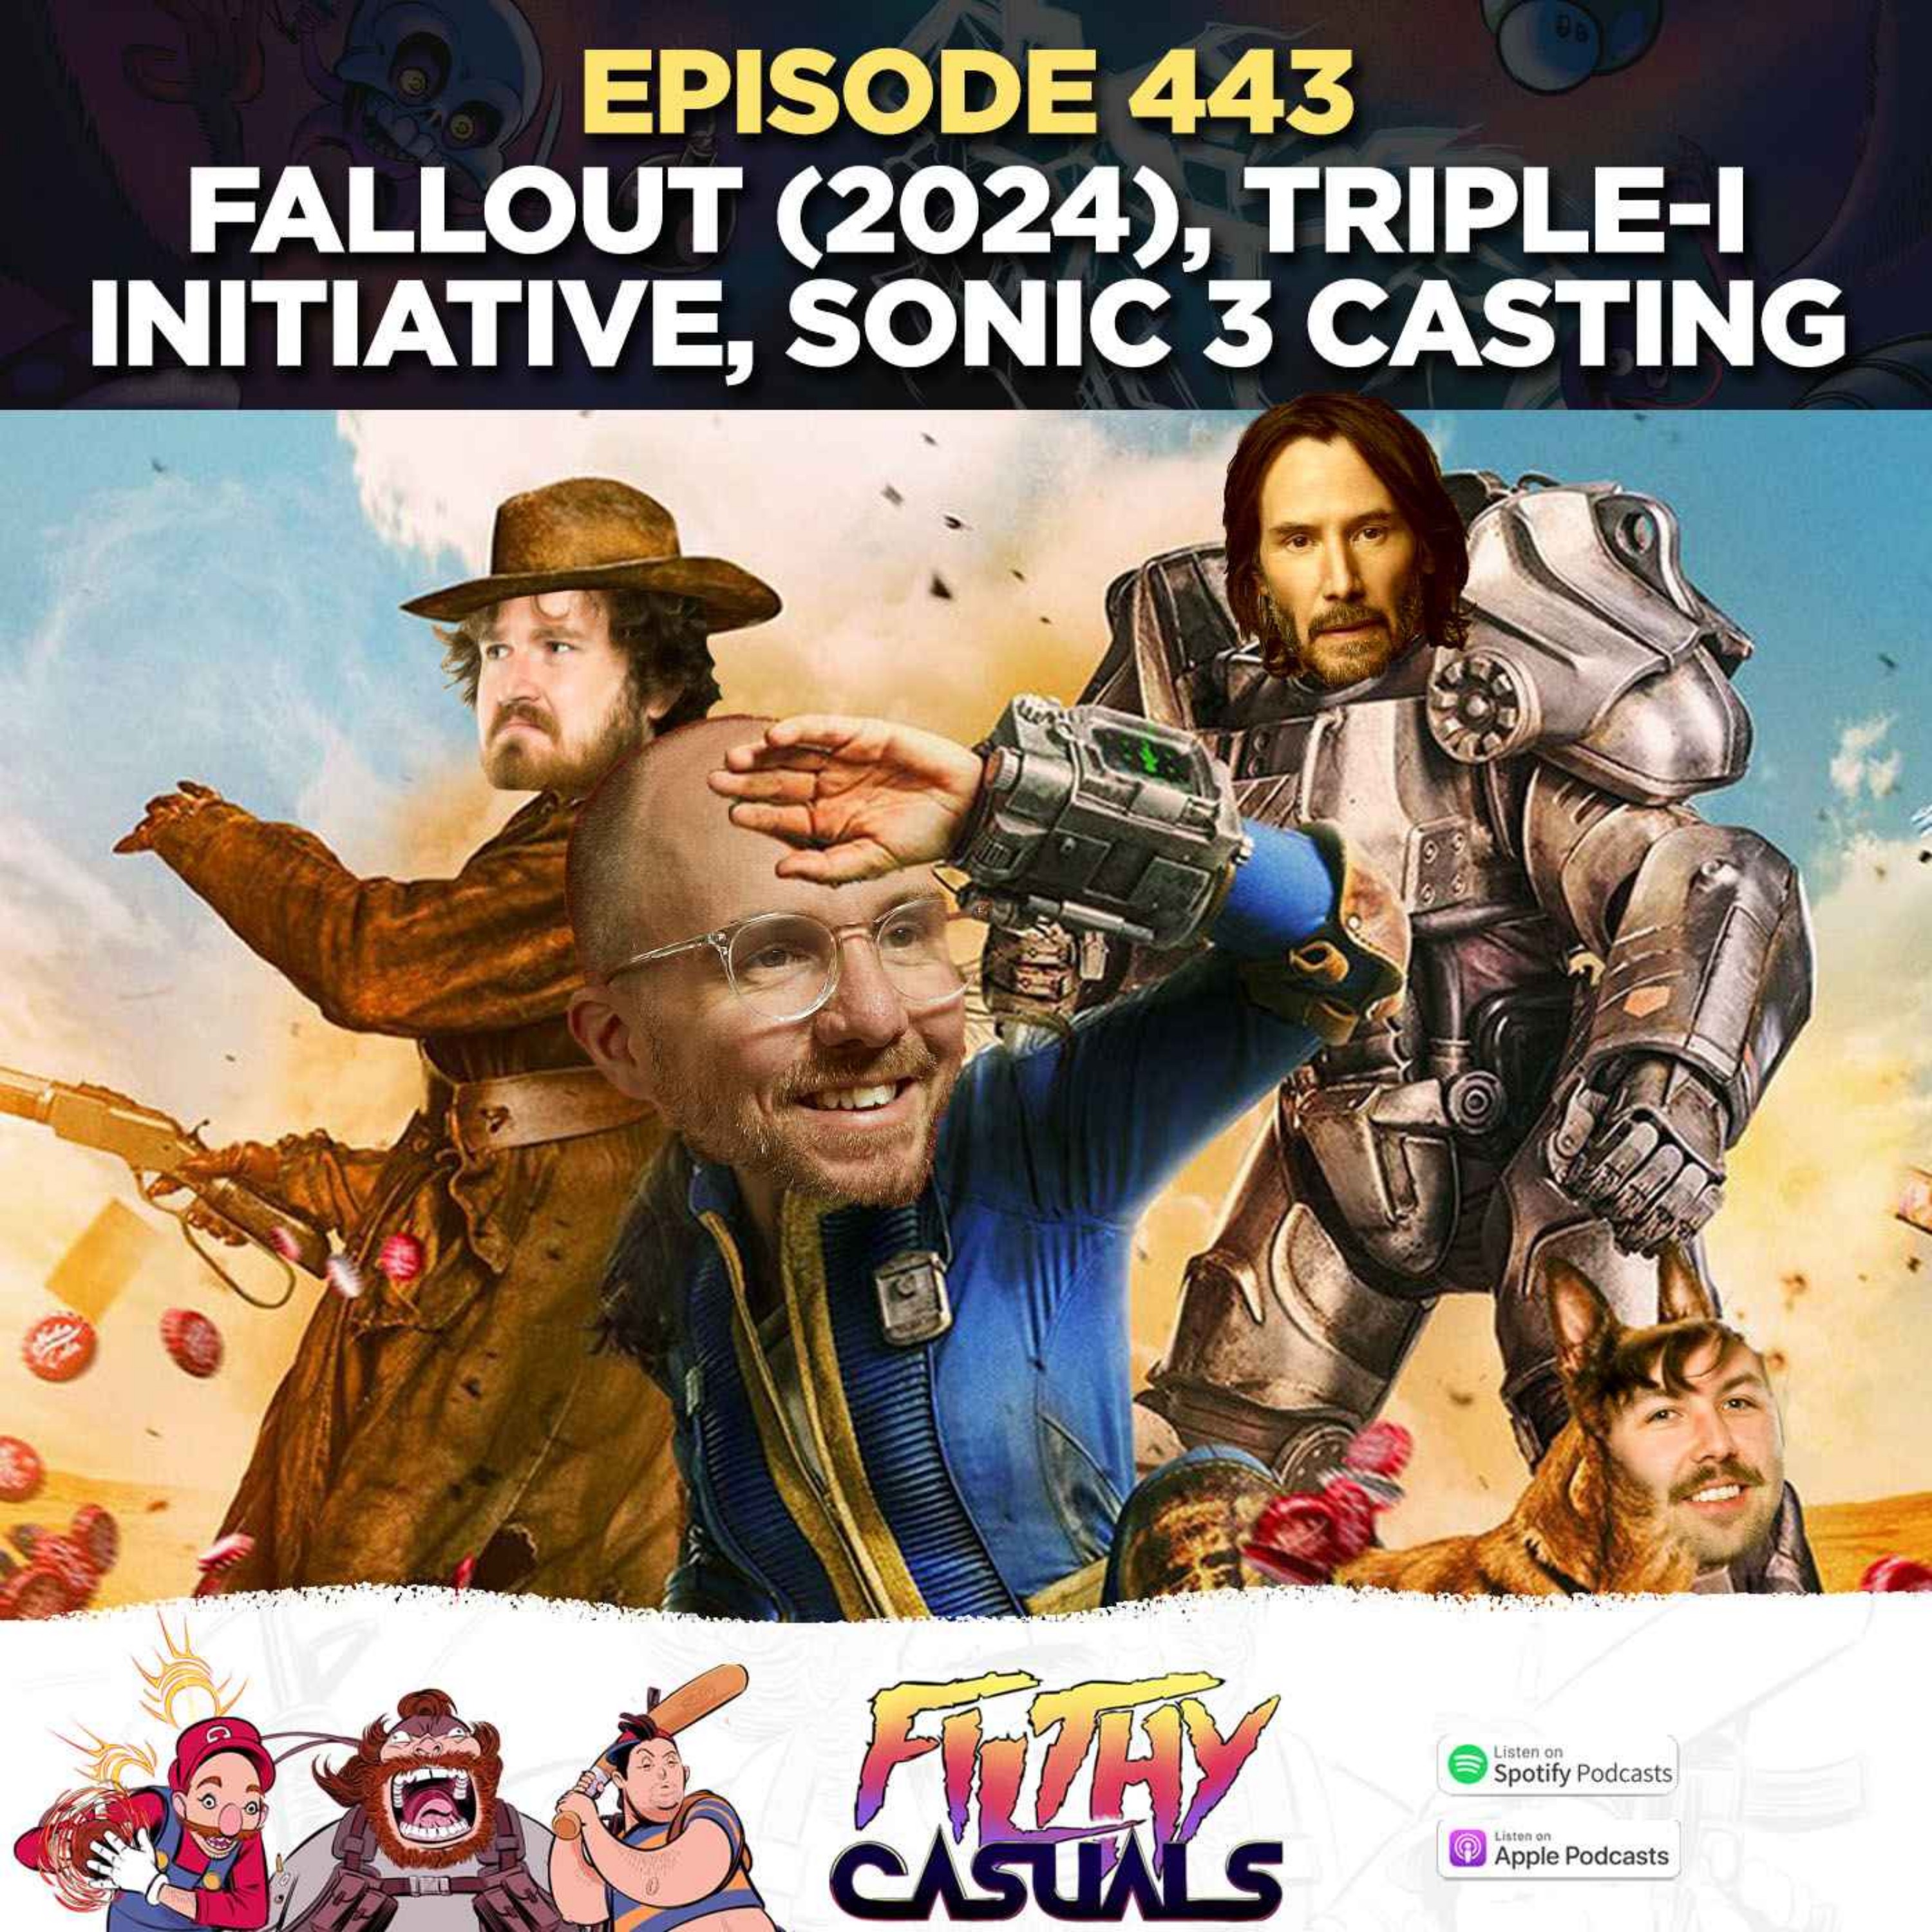 Episode 443: Fallout (2024), Triple-I Initiative, Sonic 3 Casting